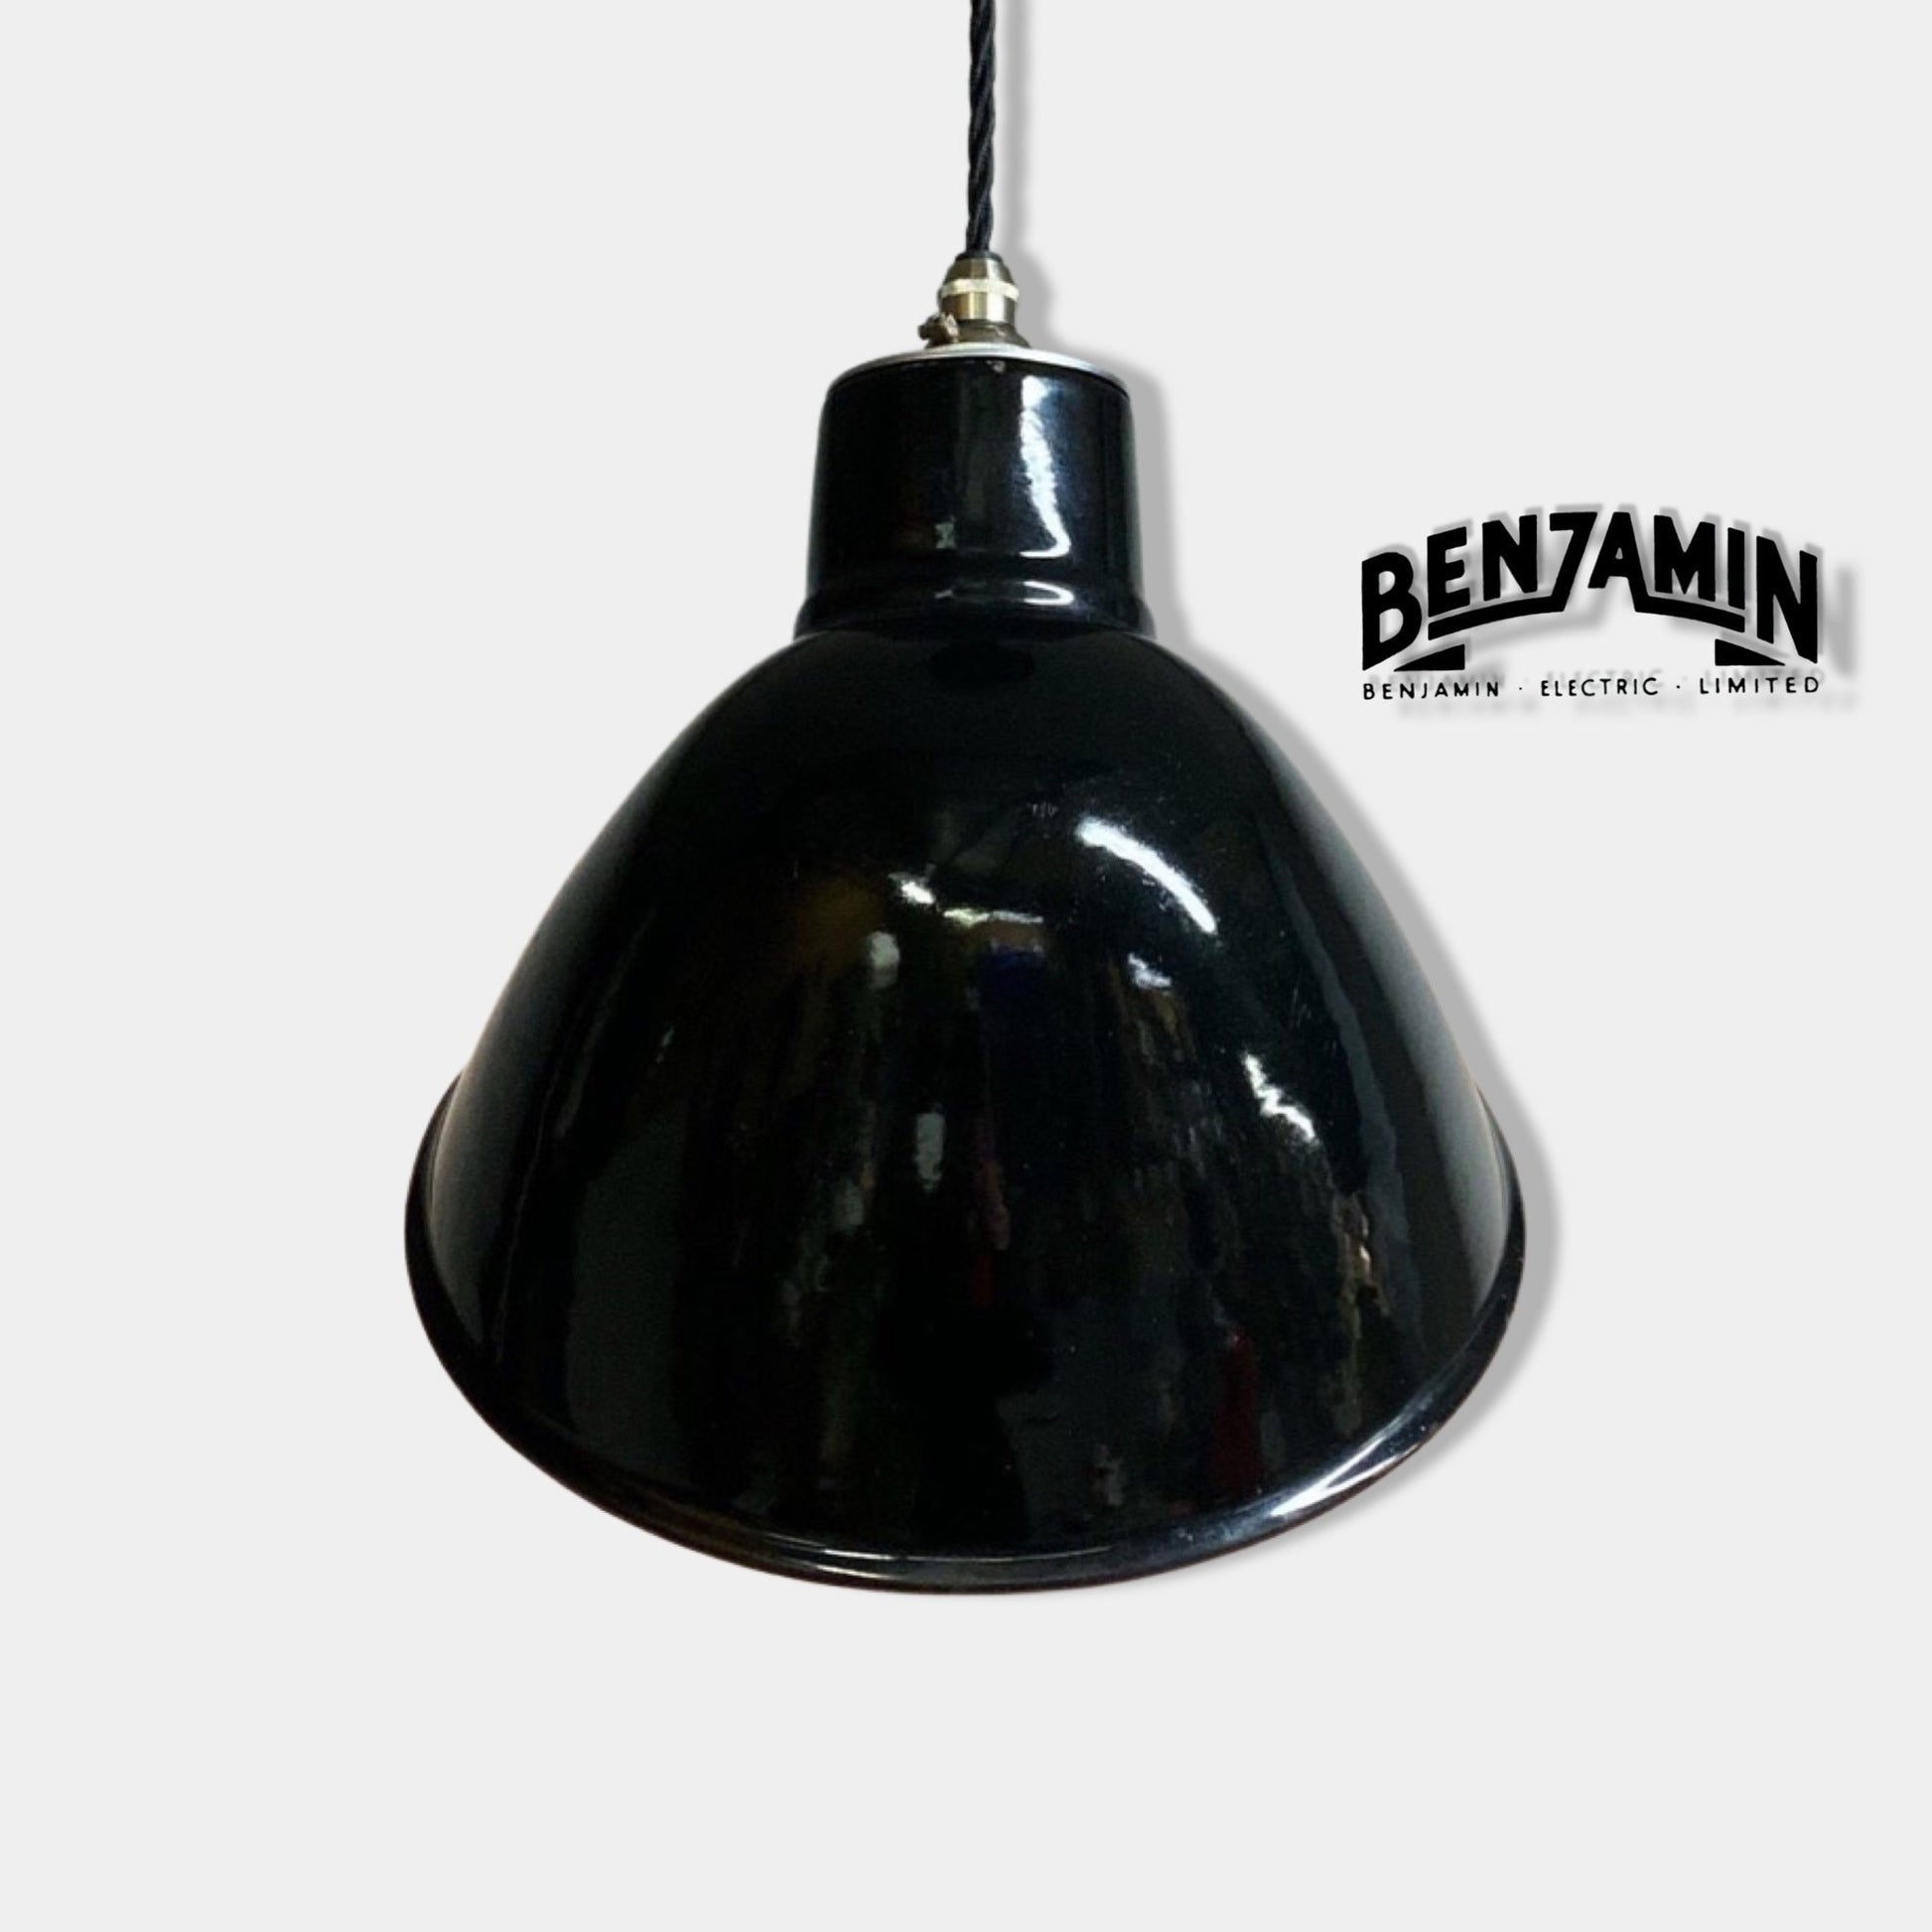 Stratton ~ Midnight Black Parabolic Angled Shade Pendant Set Light | Ceiling Dining Room 1950’s Thorlux Style | Vintage Edison Bulb Lamp